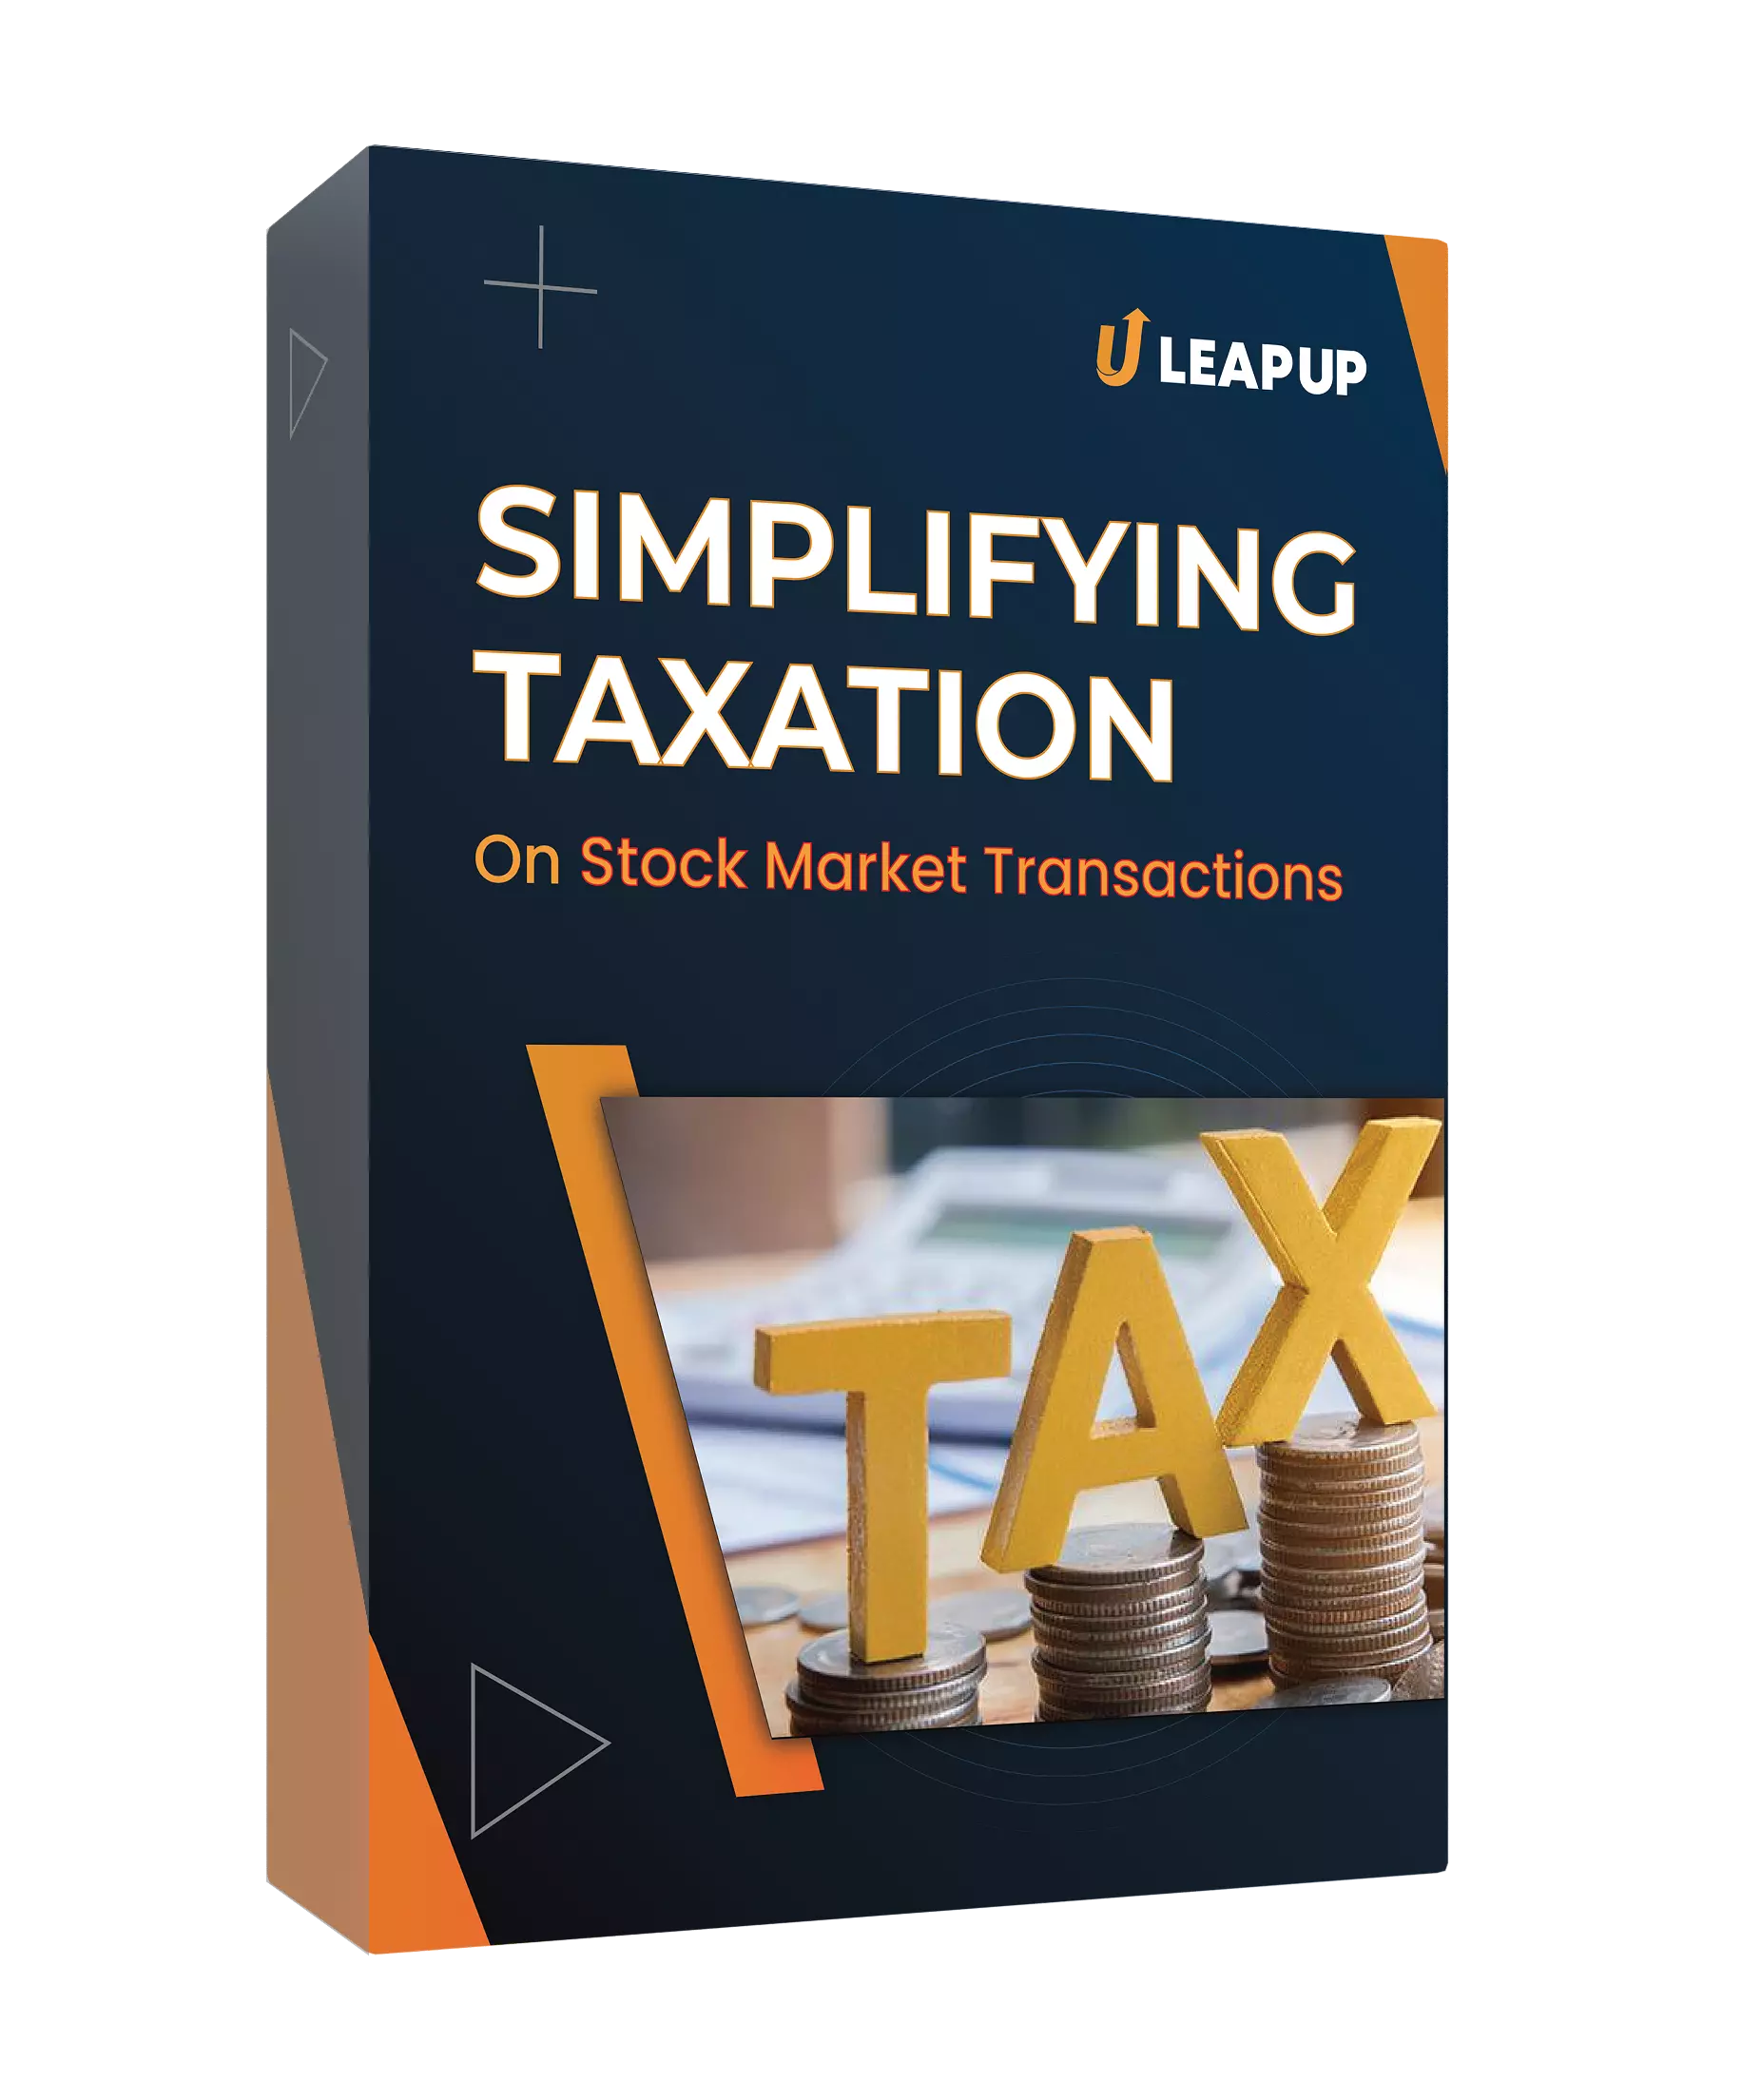 Simplifying taxation